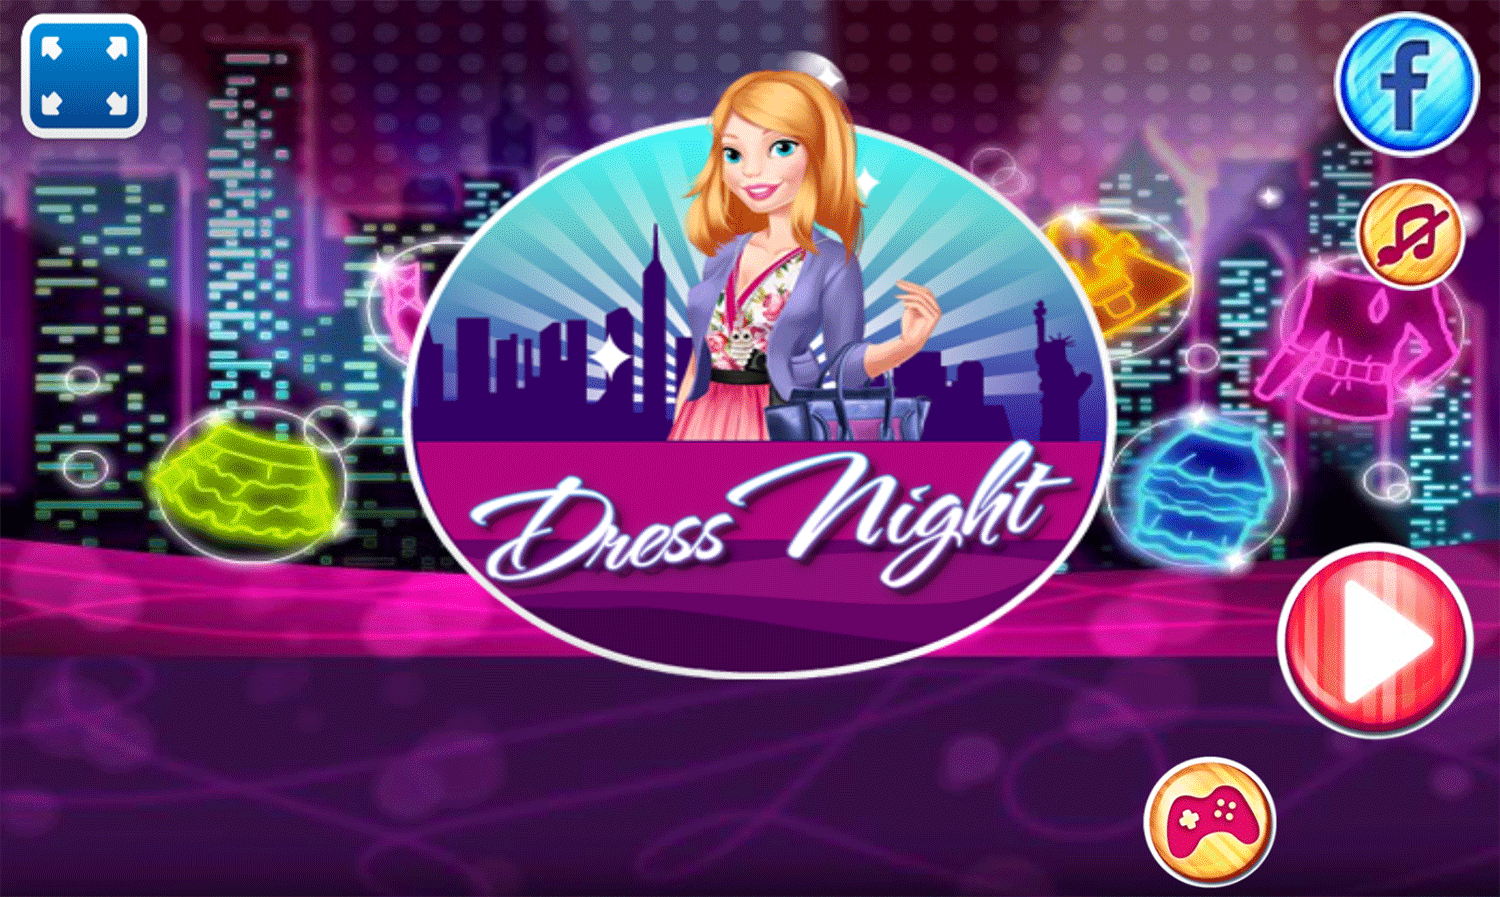 Dress Night Dress Up Game Welcome Screen Screenshot.